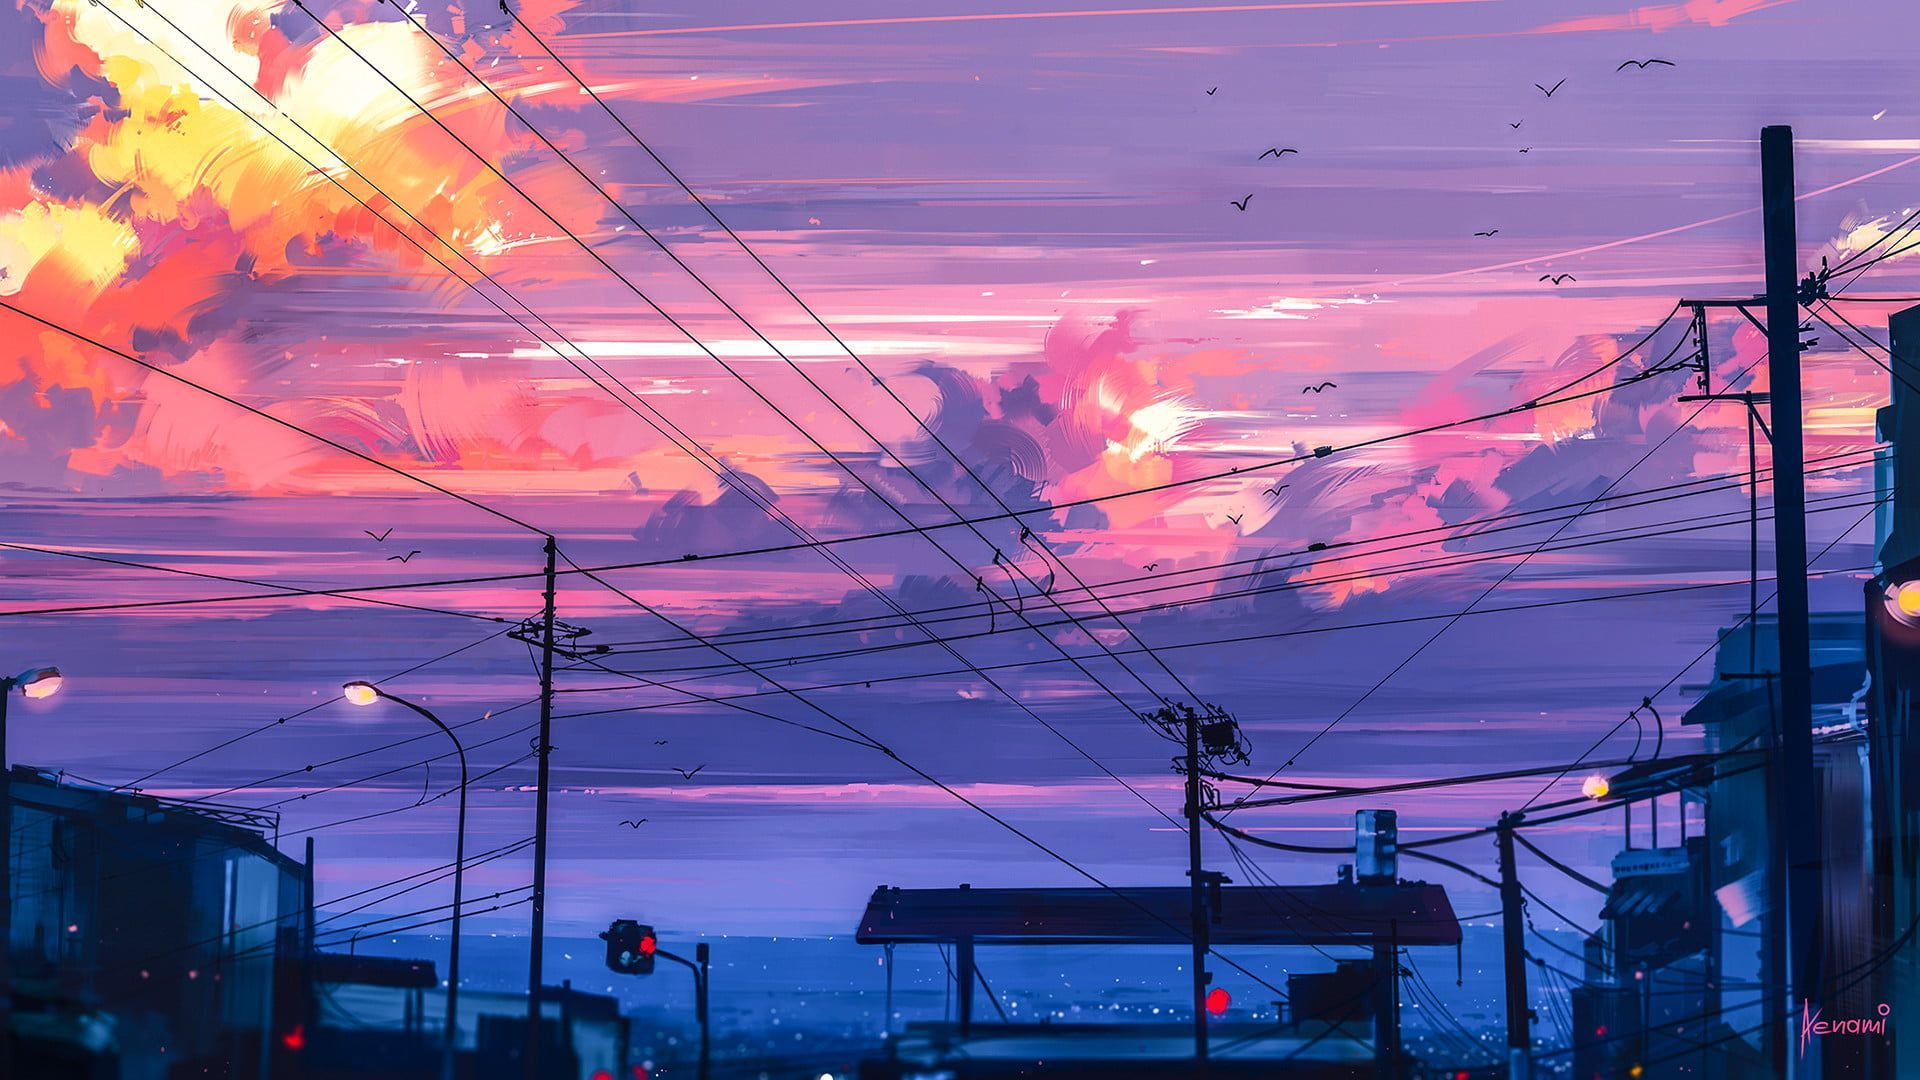 black and white compound bow digital art #illustration #sunset #city #clouds #artwork #lin. Desktop wallpaper art, Scenery wallpaper, Anime background wallpaper